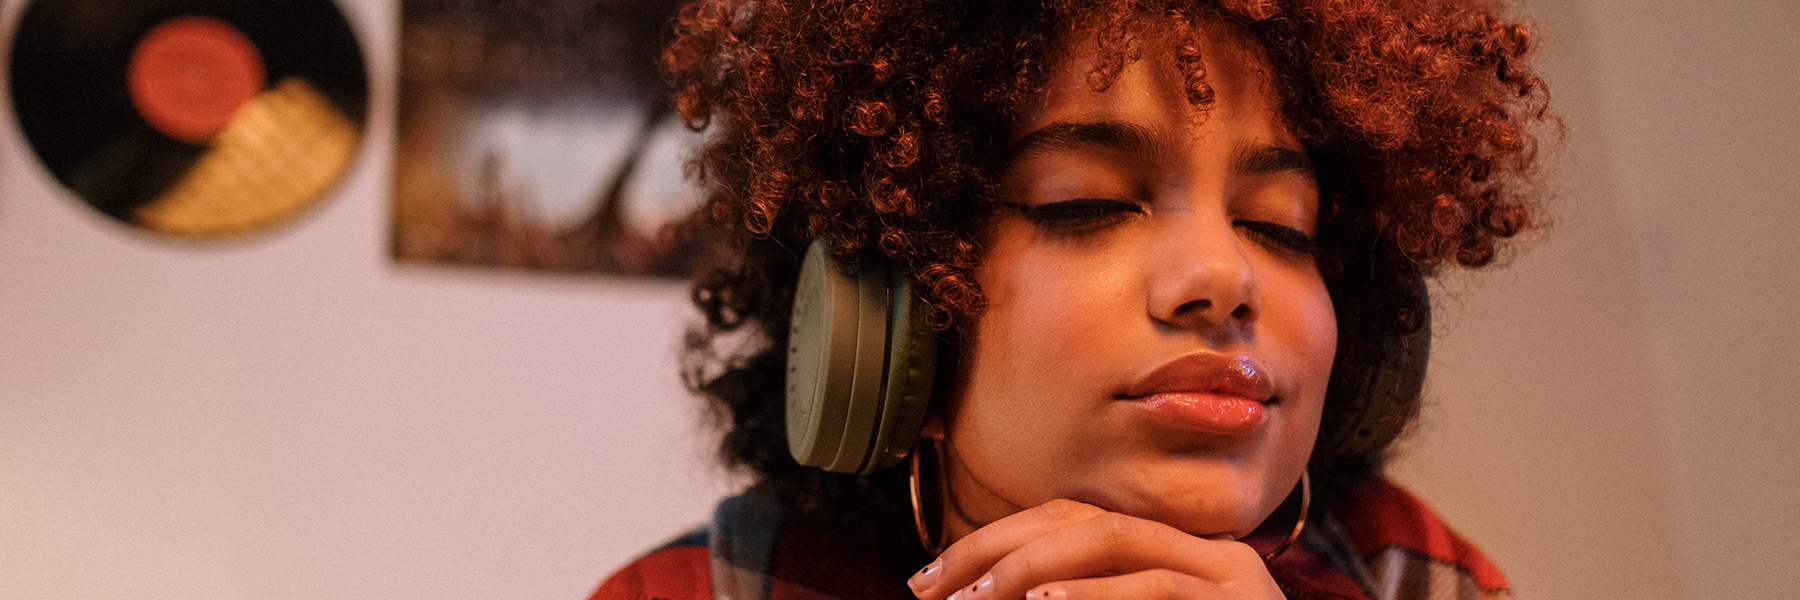 Woman enjoying listening to something with headphones on